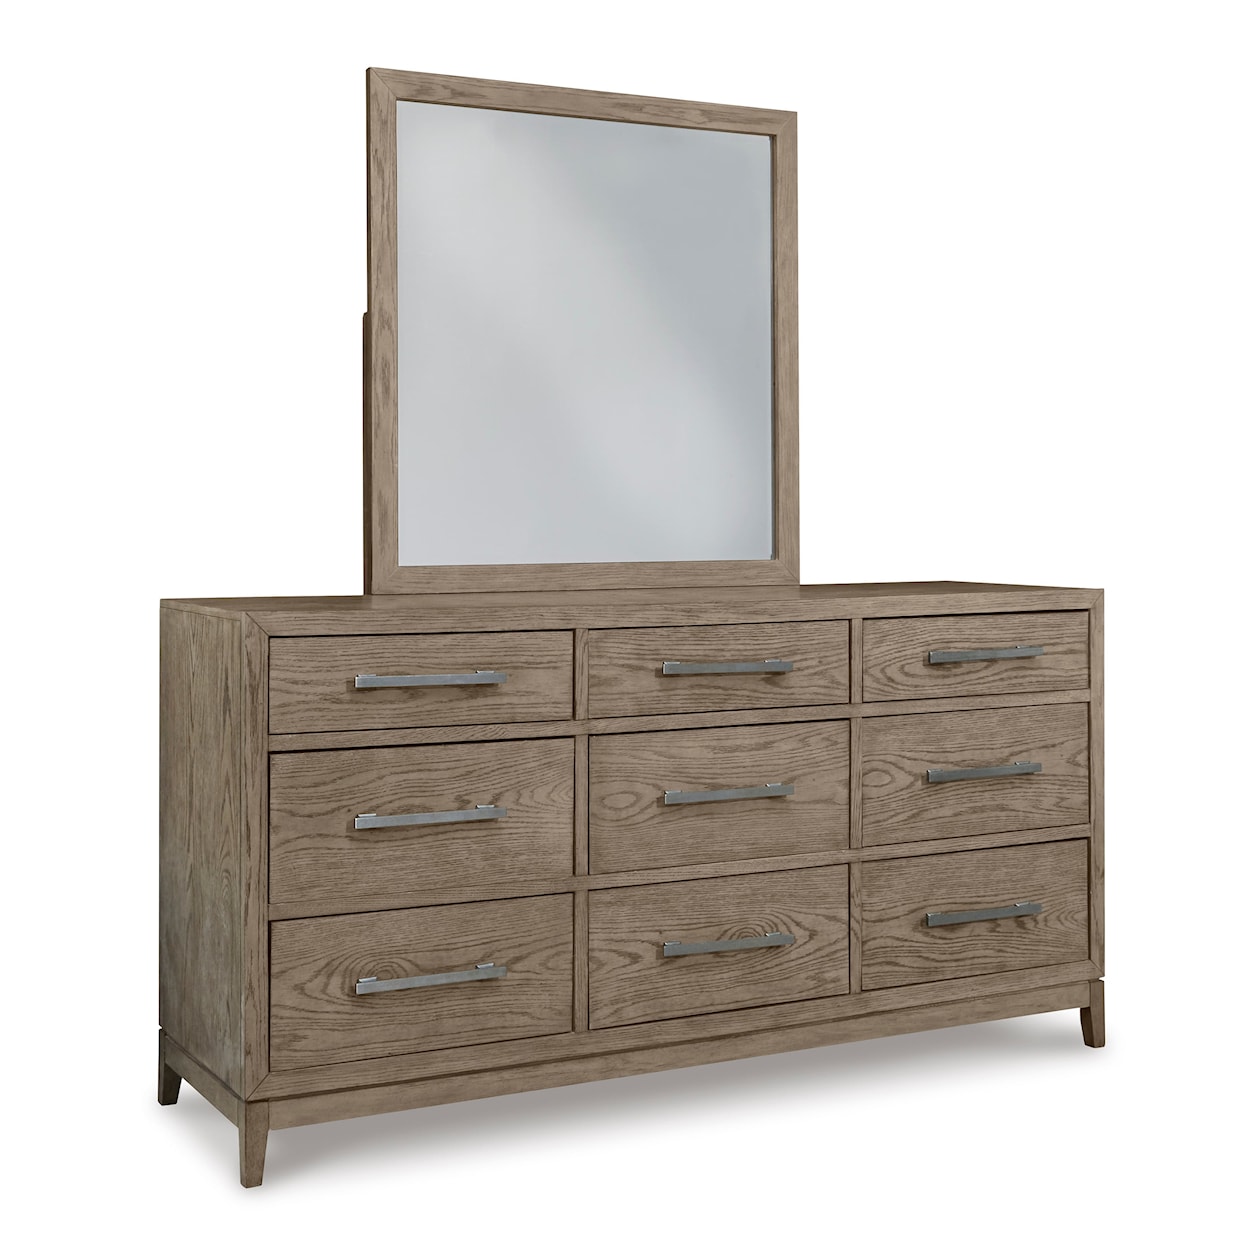 Ashley Furniture Signature Design Chrestner Dresser and Mirror Set